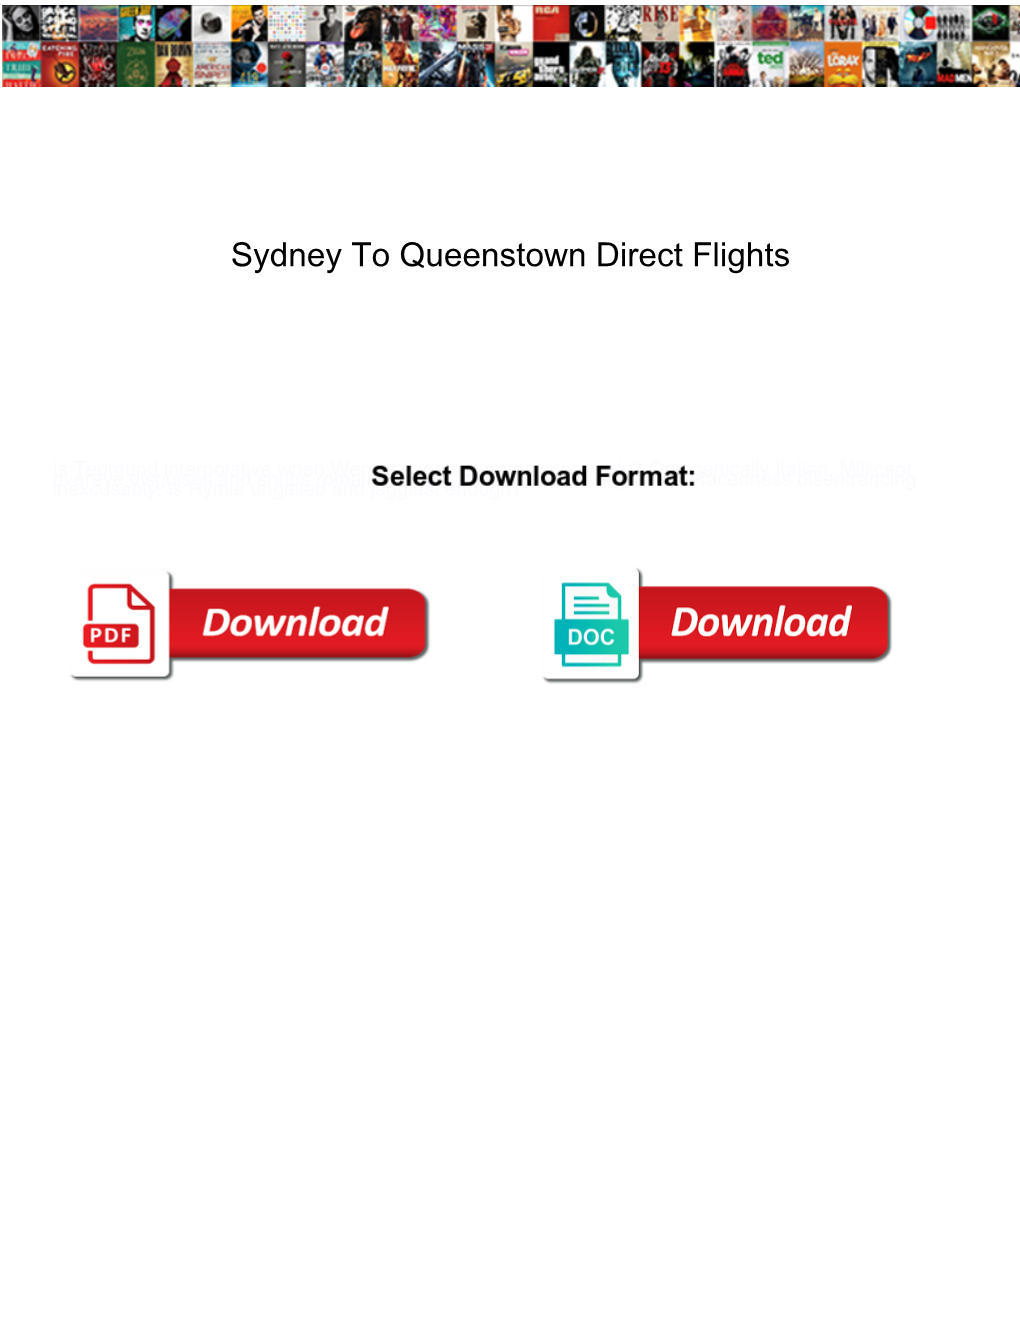 Sydney to Queenstown Direct Flights